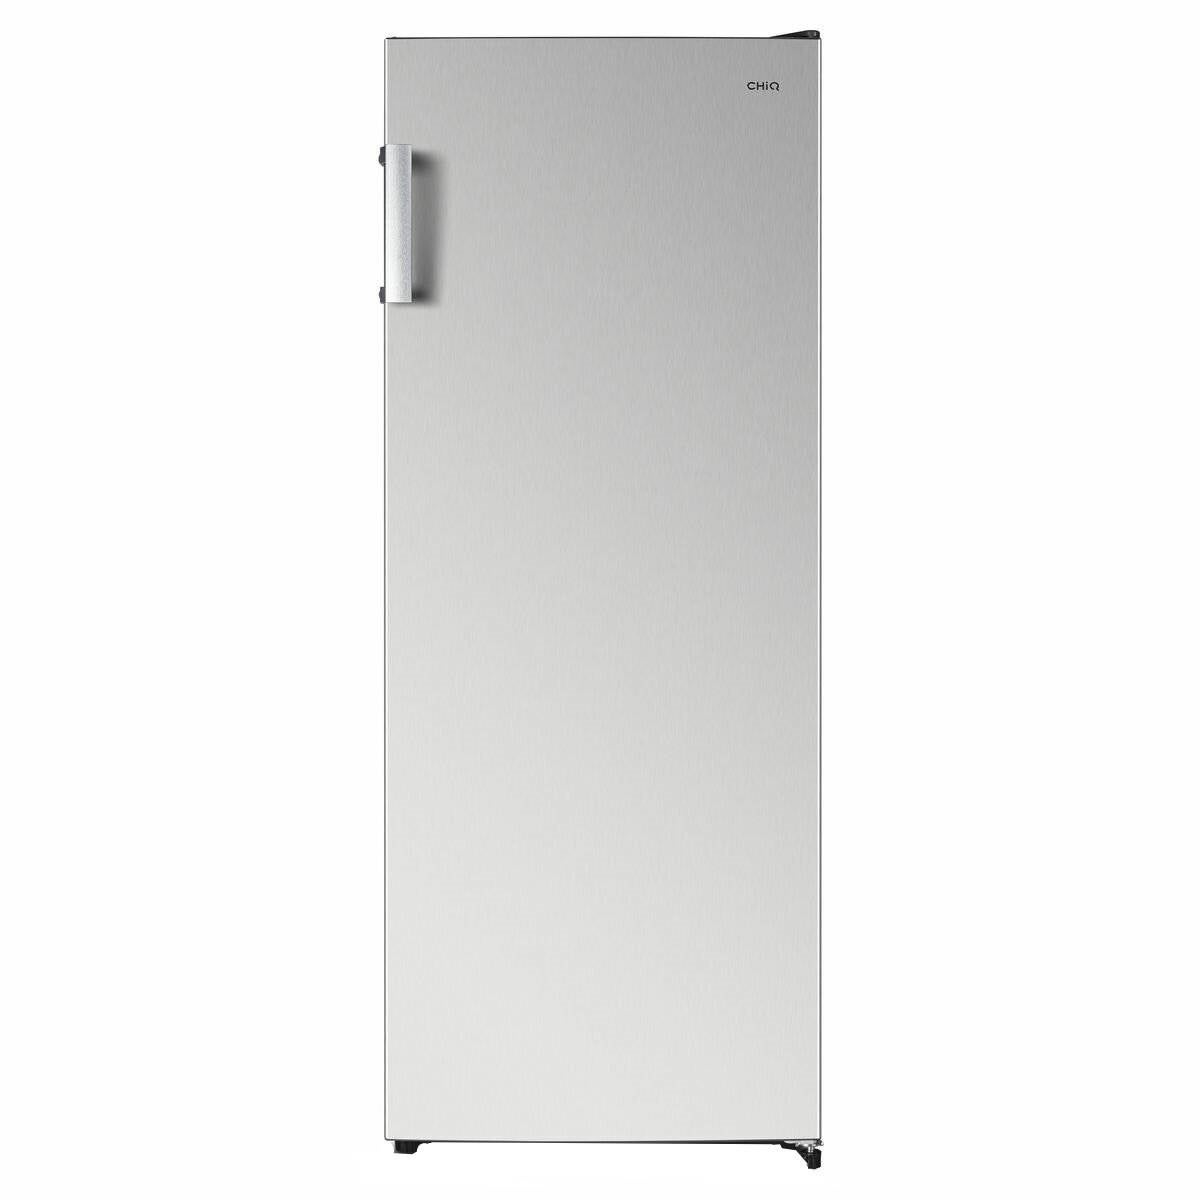 CHiQ CSF165N Upright Freezer